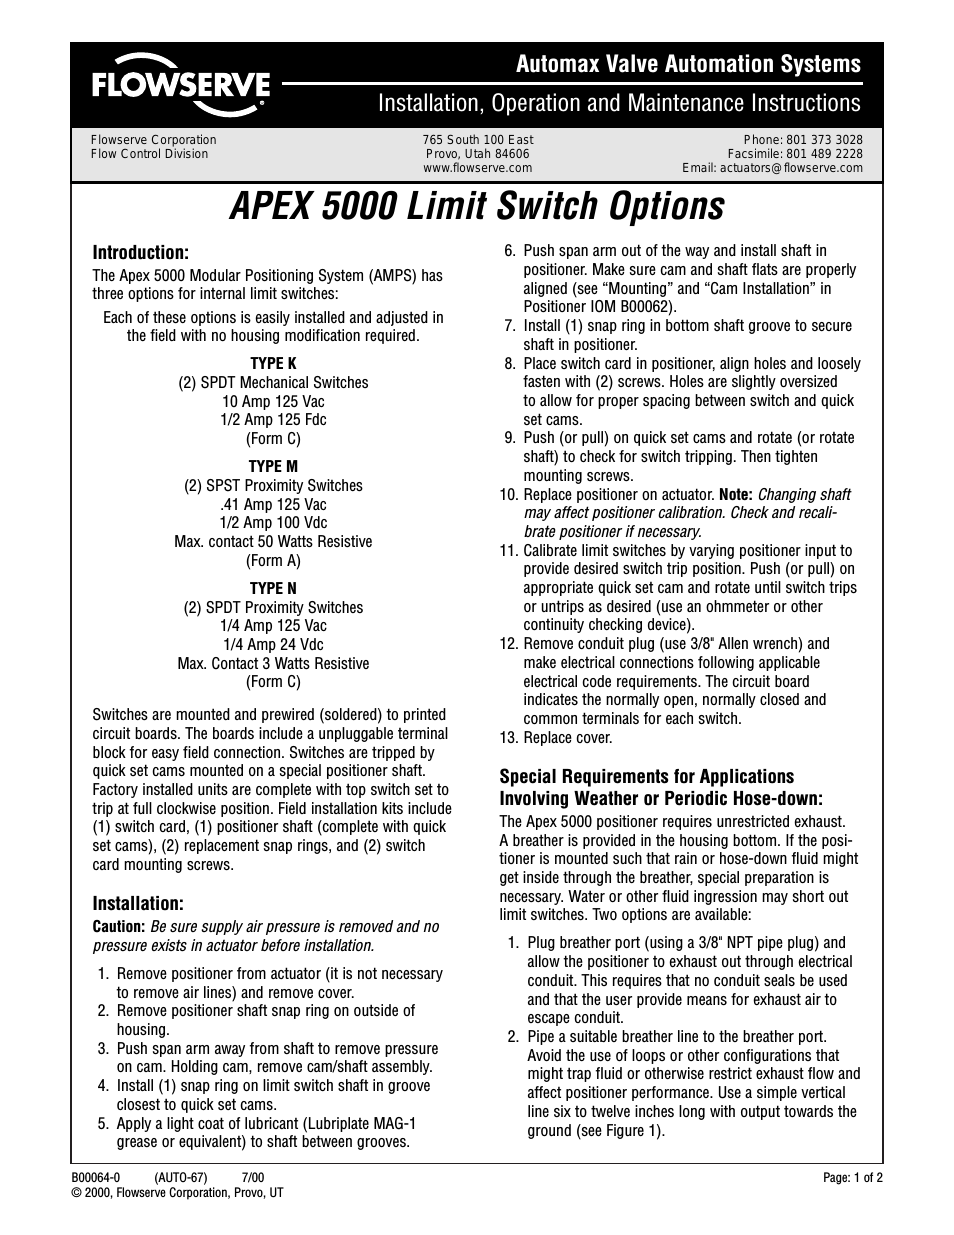 APEX 5000 Limit Switch Options